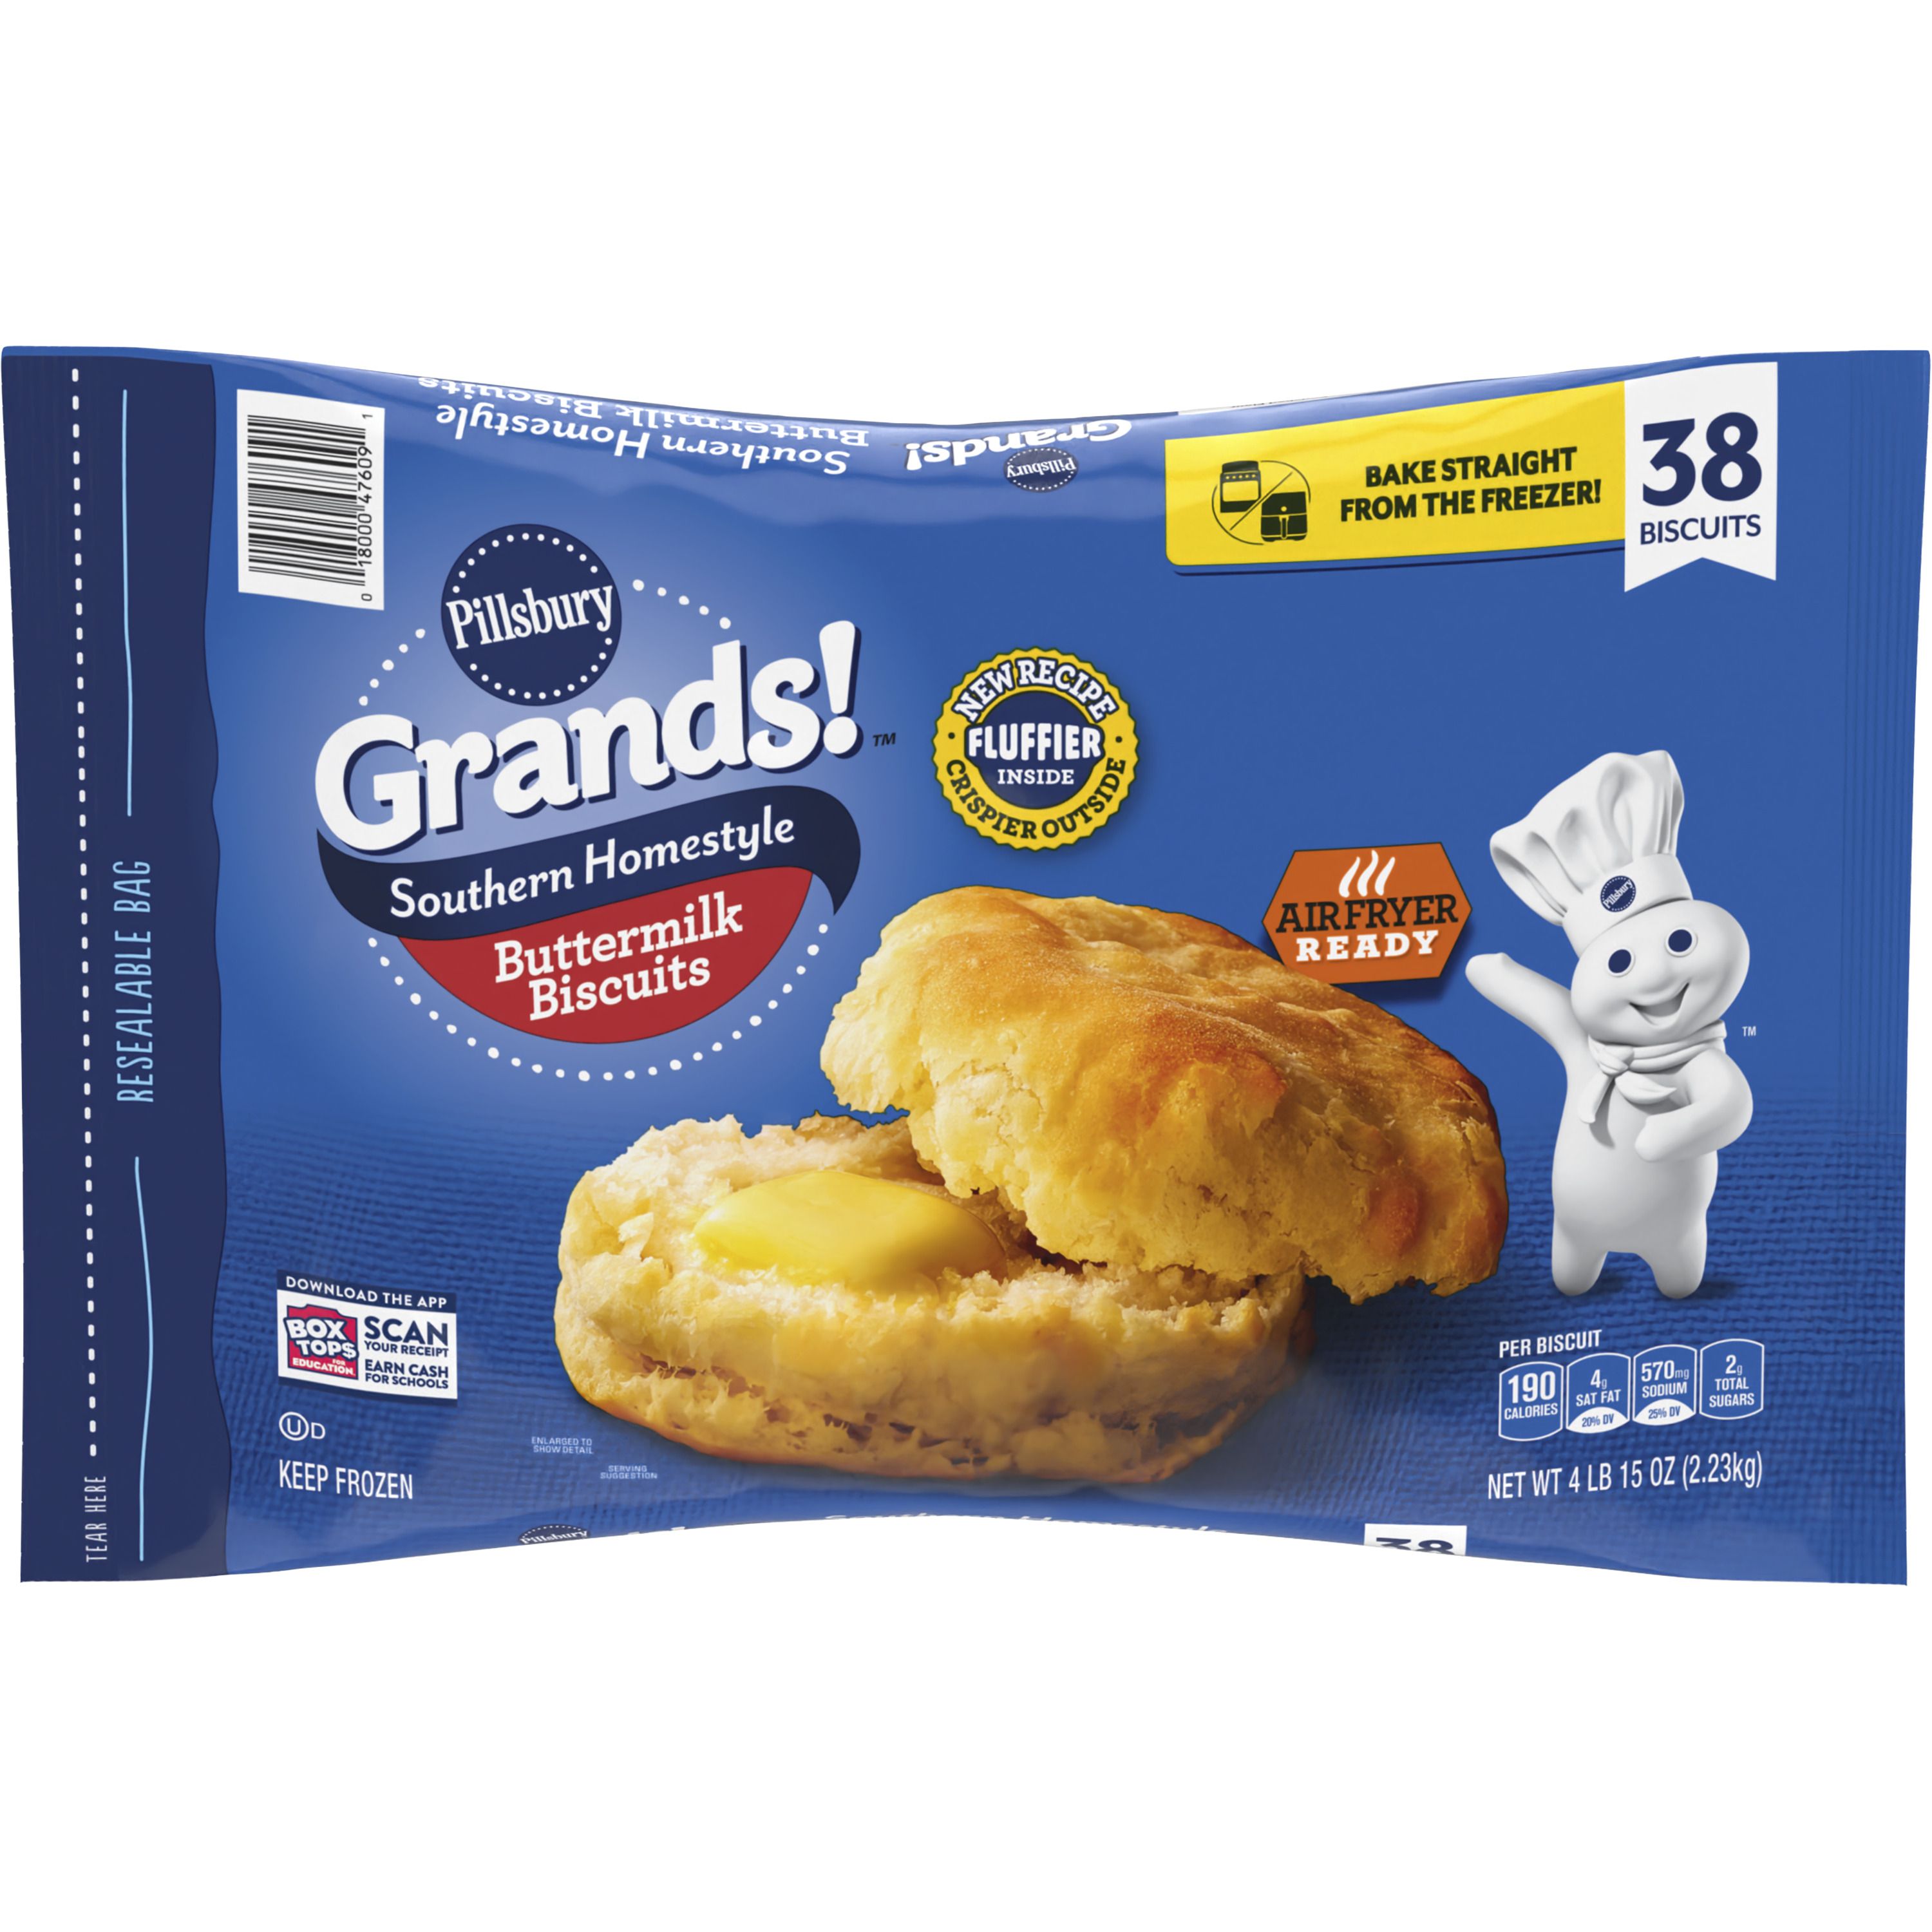 Pillsbury Grands! Southern Homestyle Frozen Biscuits, Buttermilk, 38 ct., 79 oz. - Front